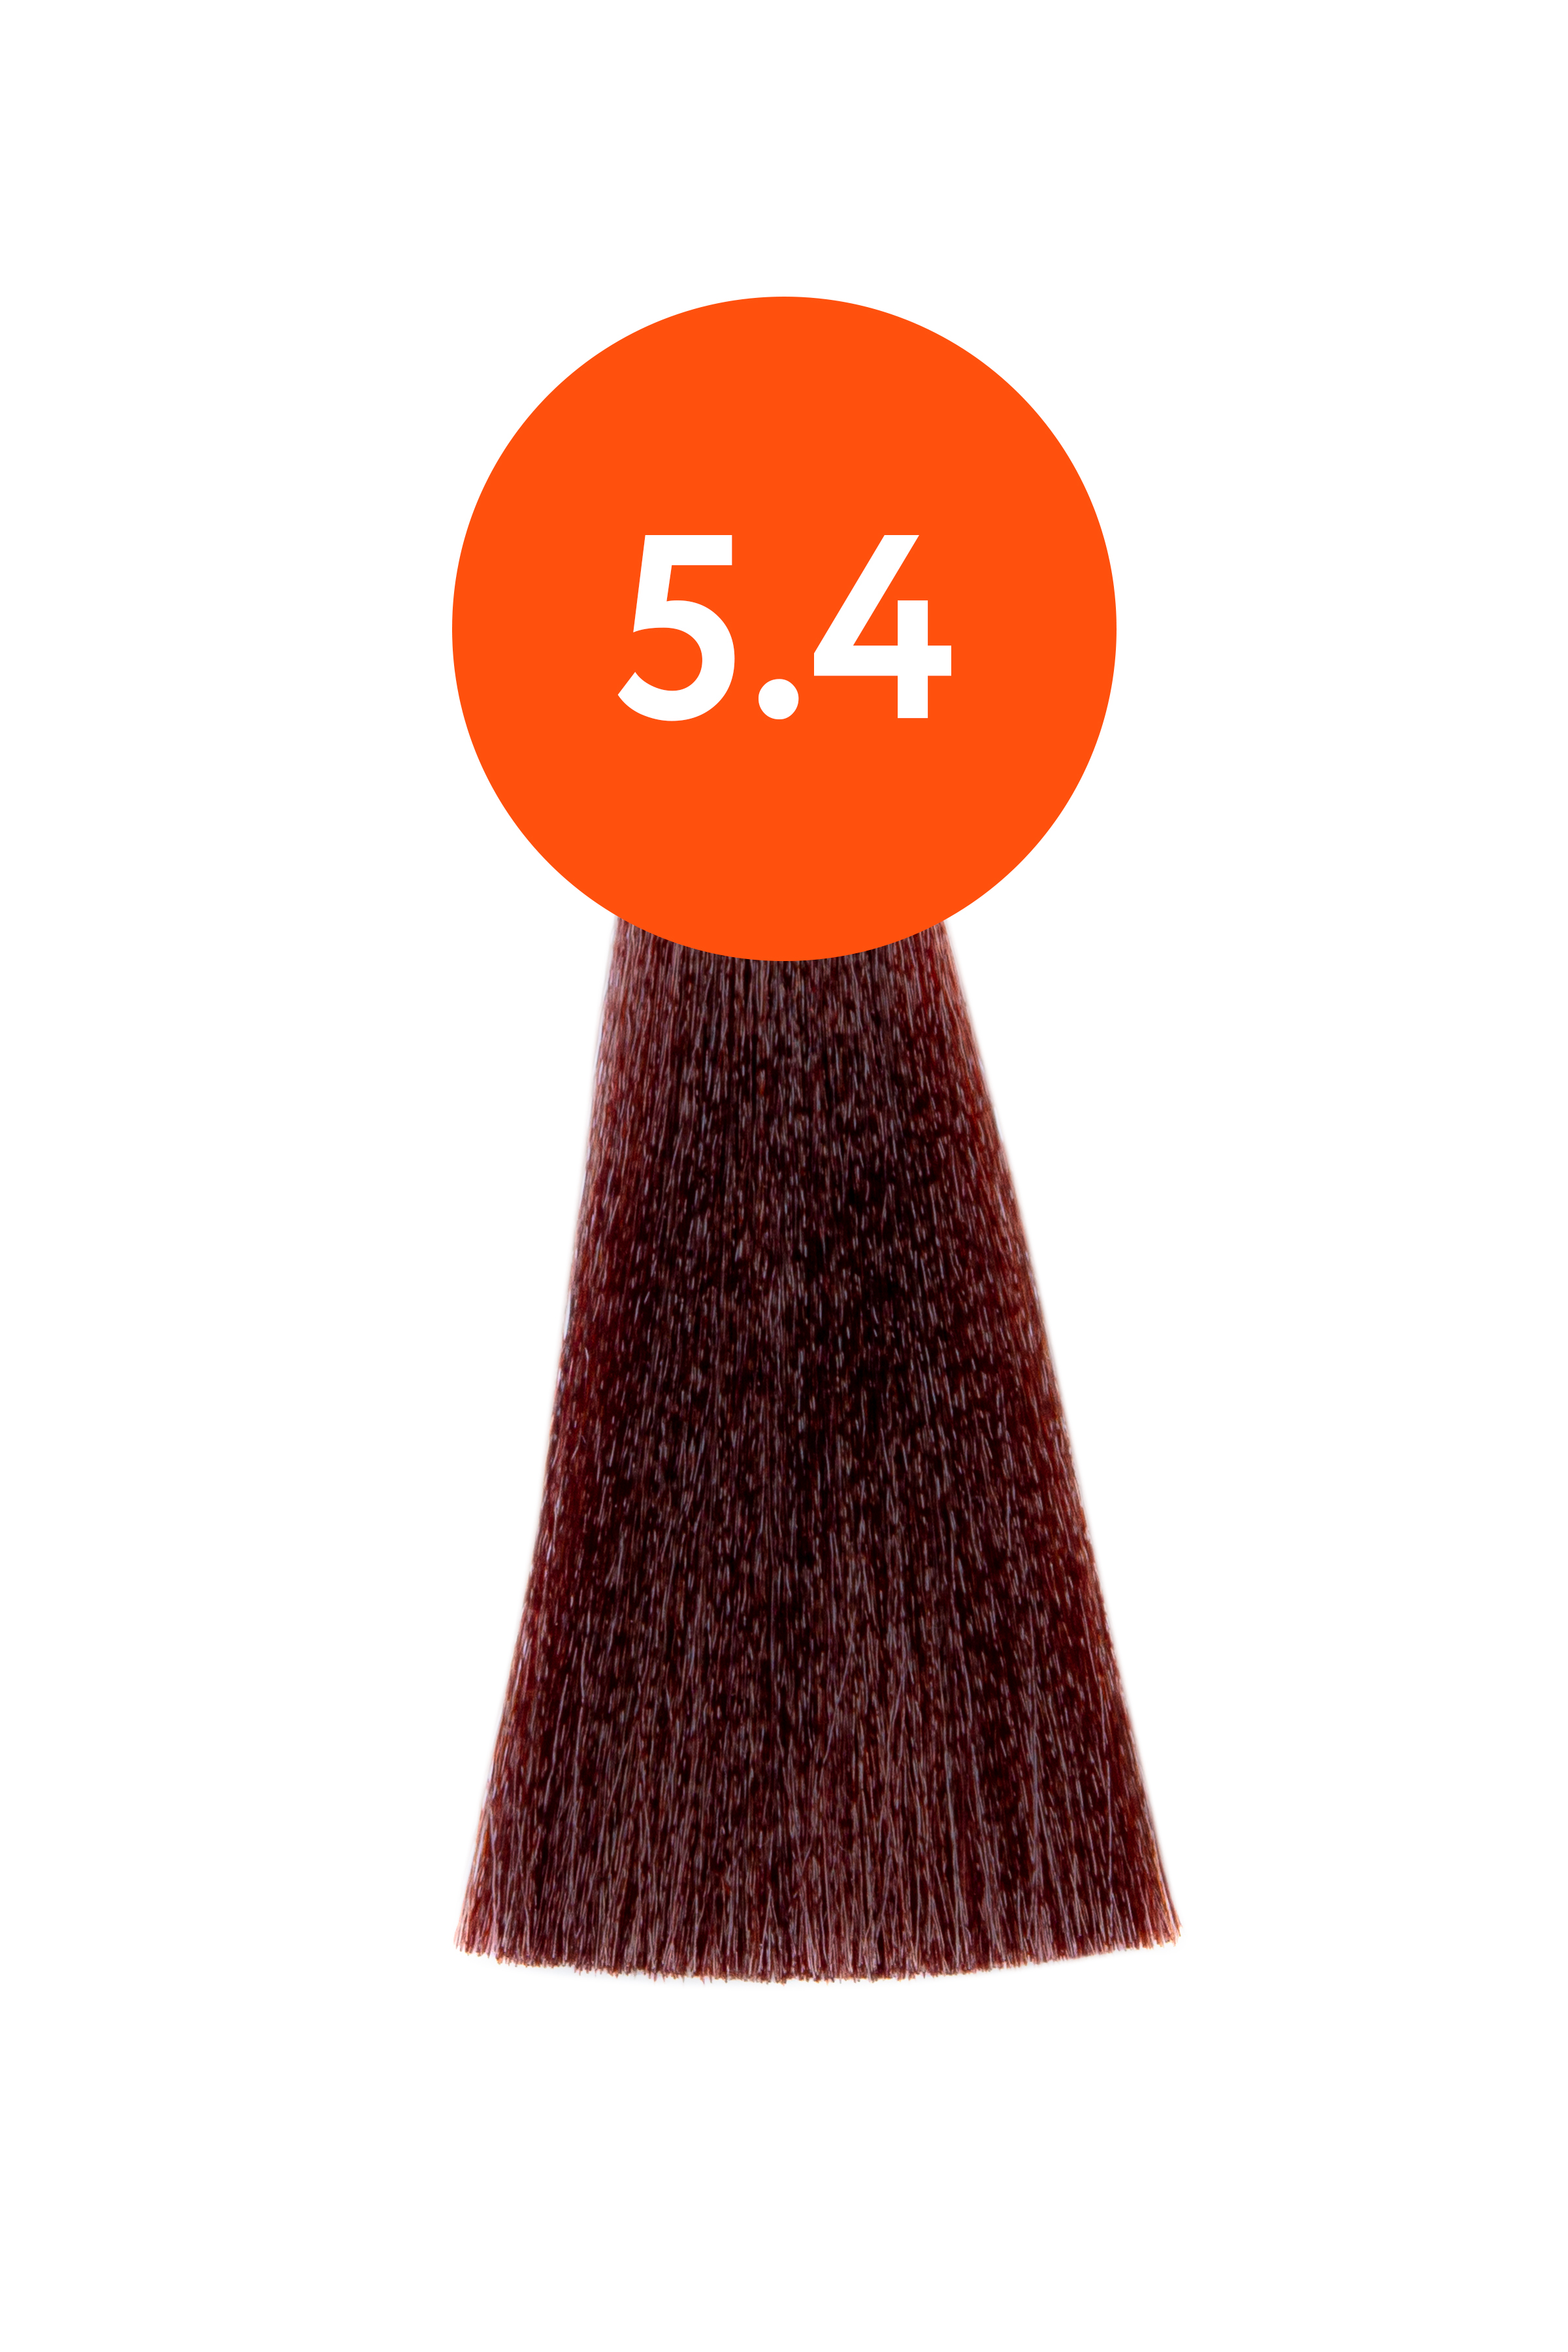 OLLIN "N-JOY"  5/4 – светлый шатен медный, перманентная крем-краска для волос 100мл